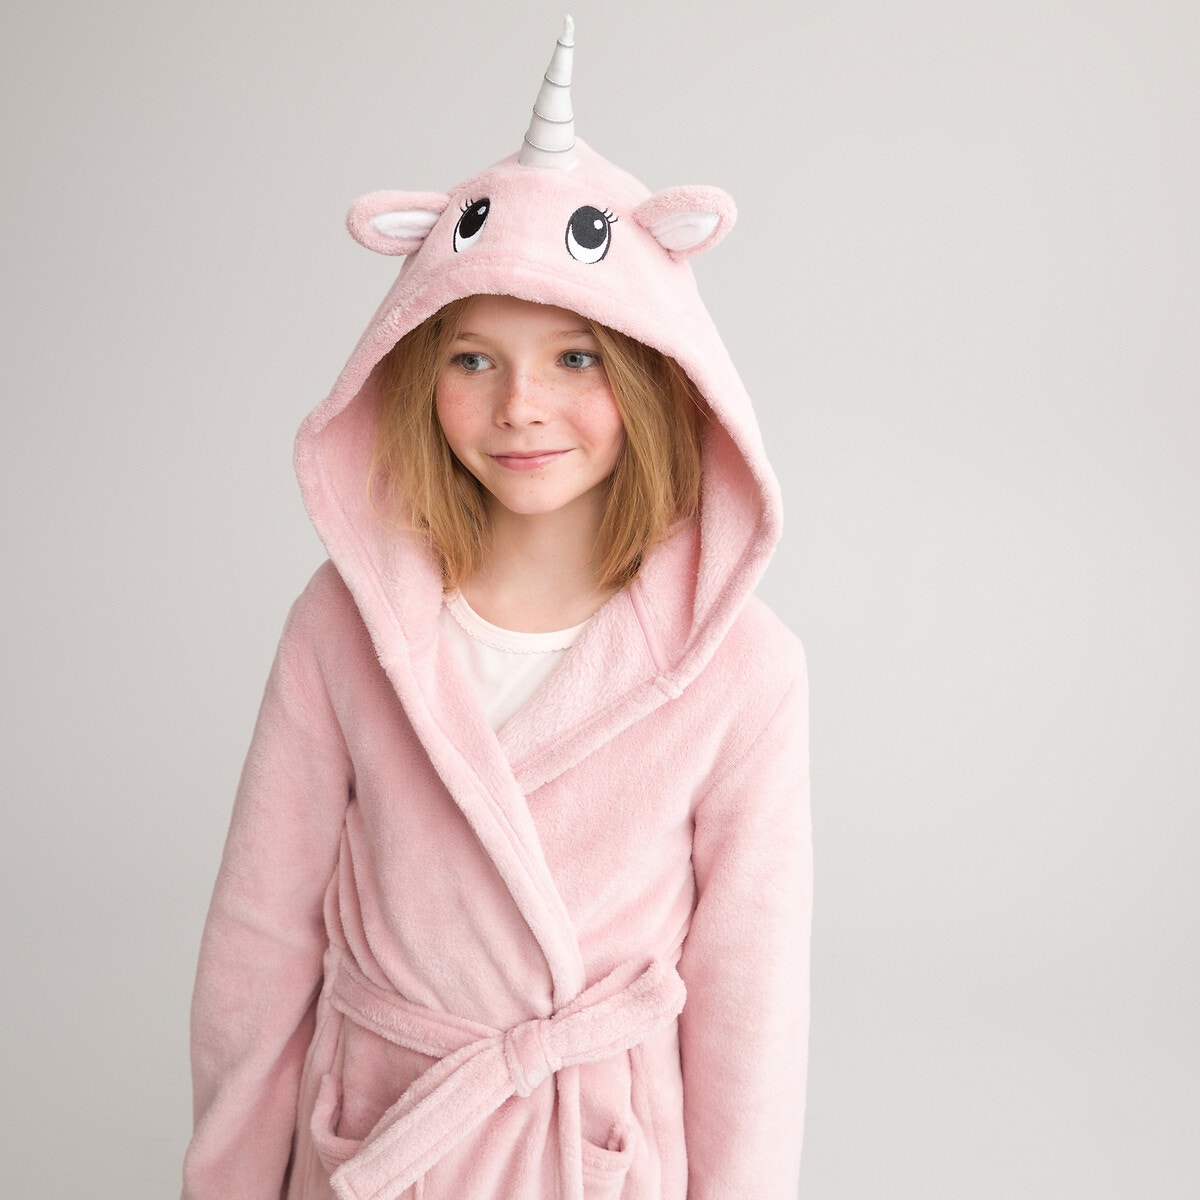 Pyjama garçon 7 ans - Surpyjama, Peignoir & Robe de chambre - vertbaudet